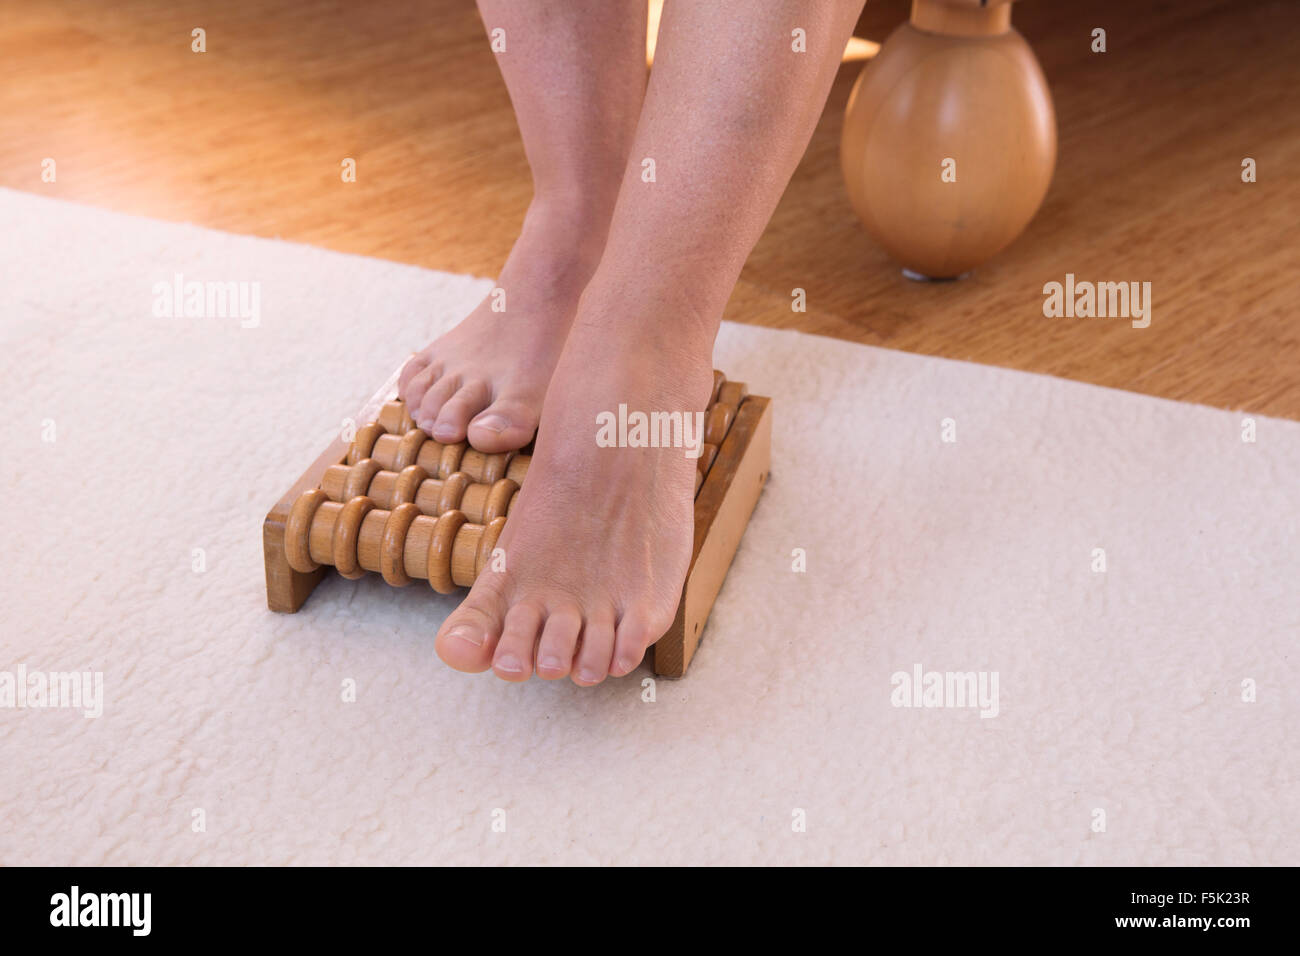 feet on wooden massage roller in bedroom Stock Photo